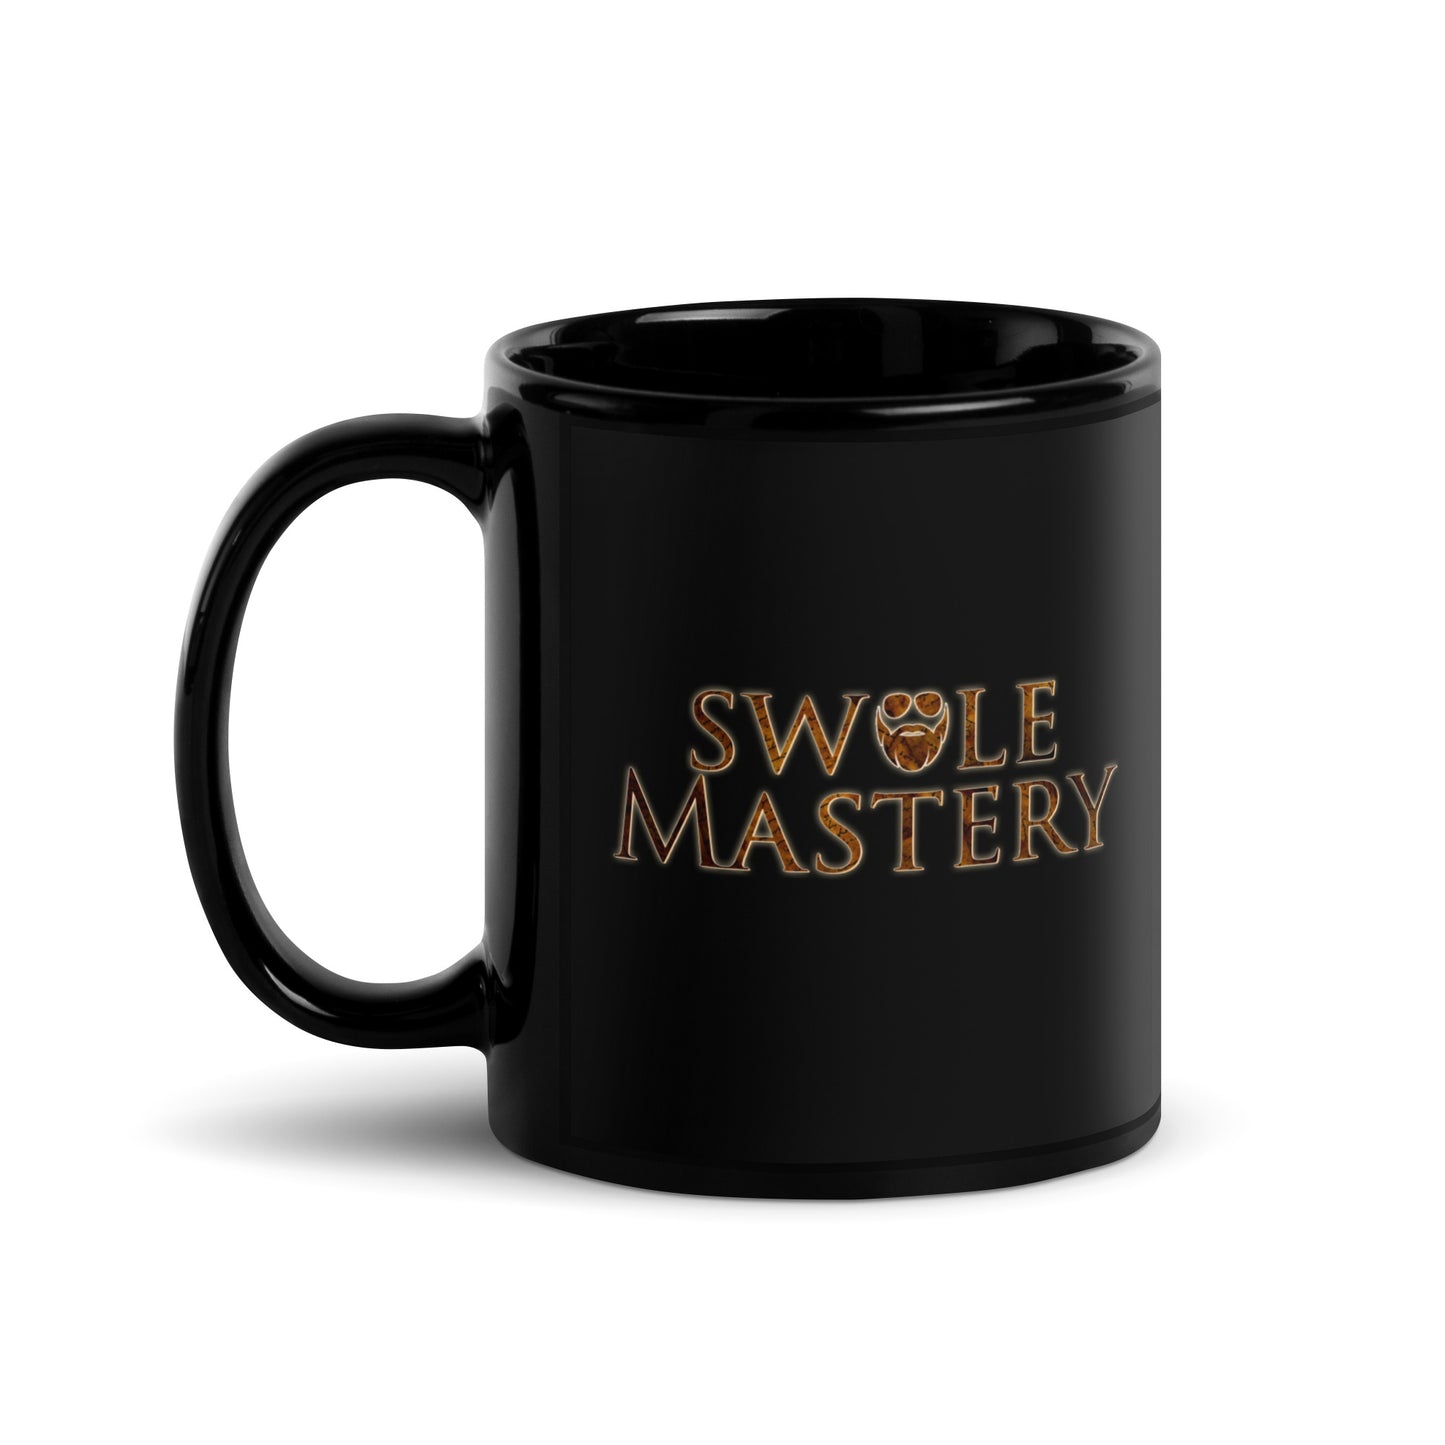 Swole Mastery Mug